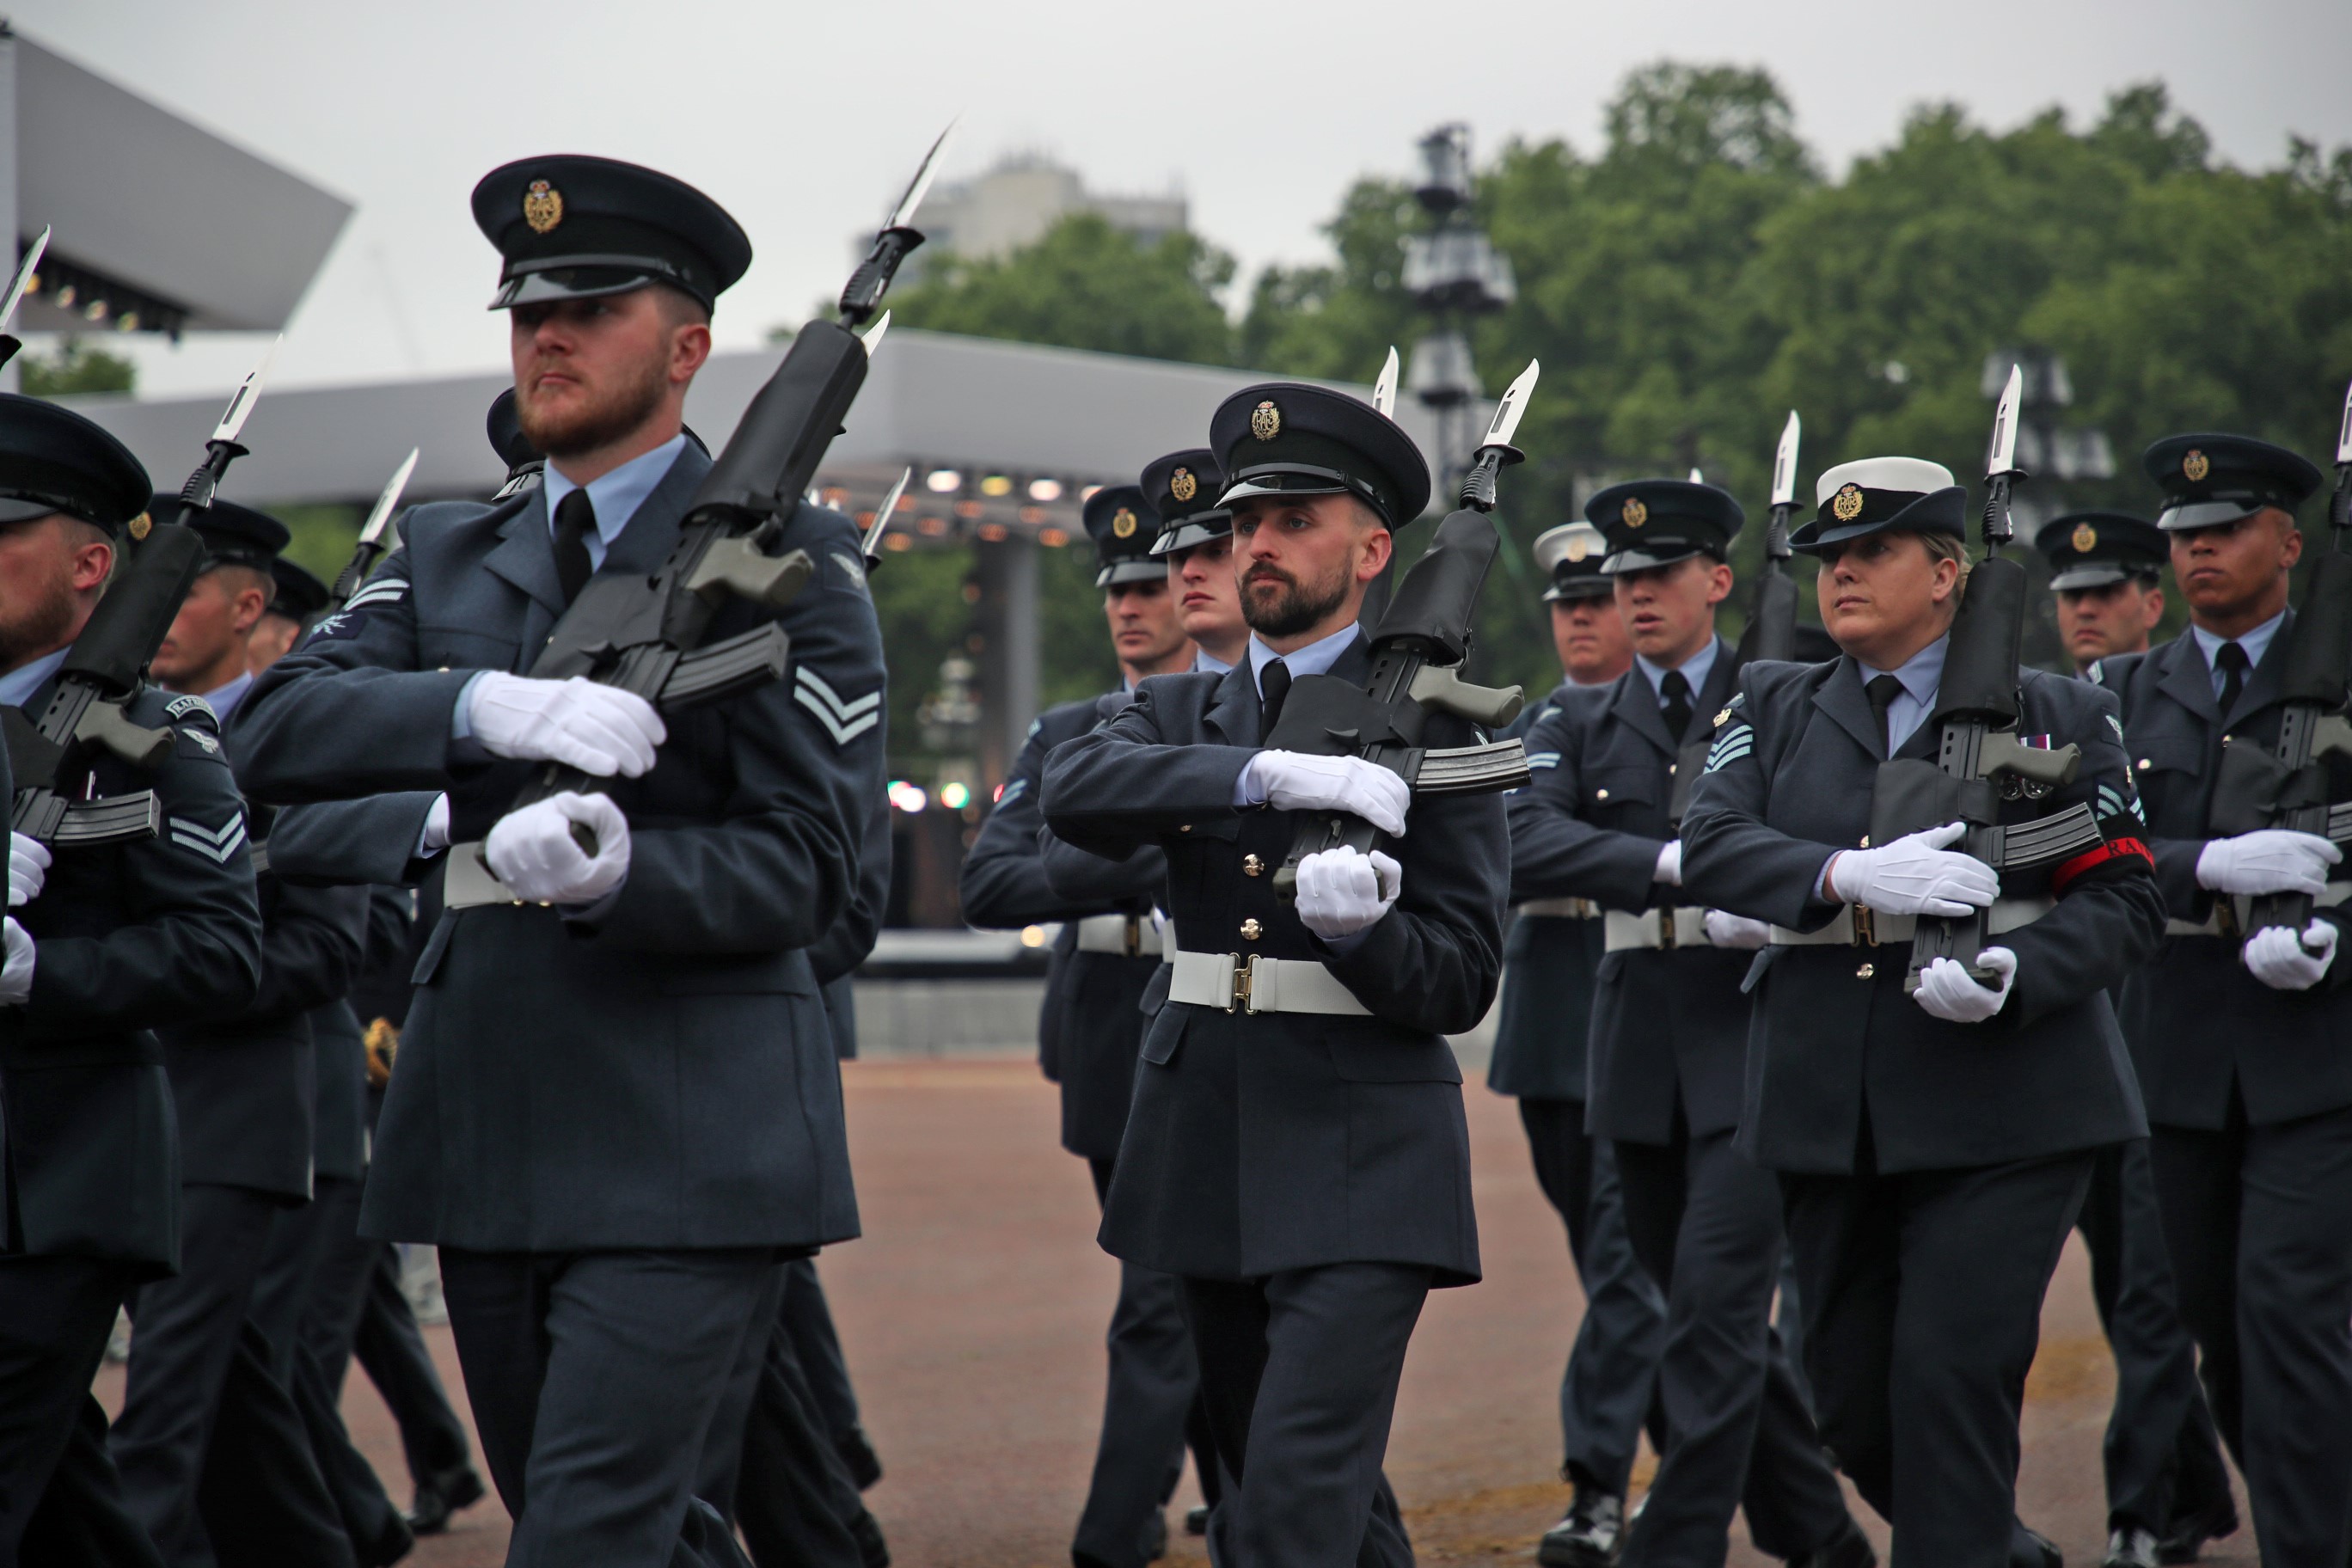 RAF aviators on parade.